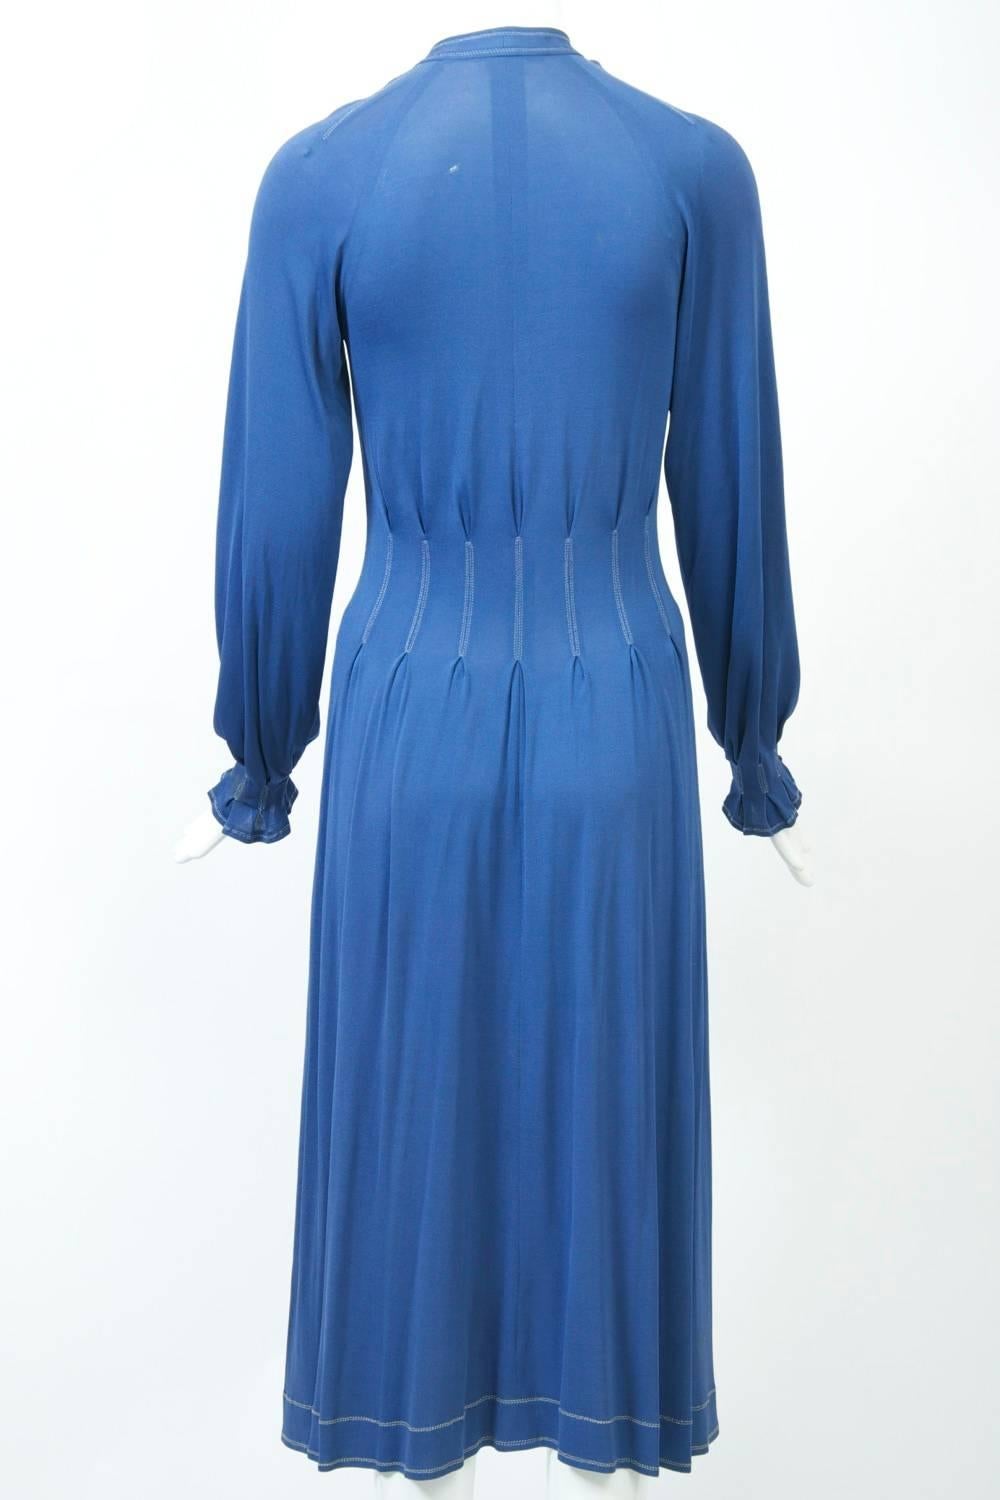 Jean Muir Blue Dress 3